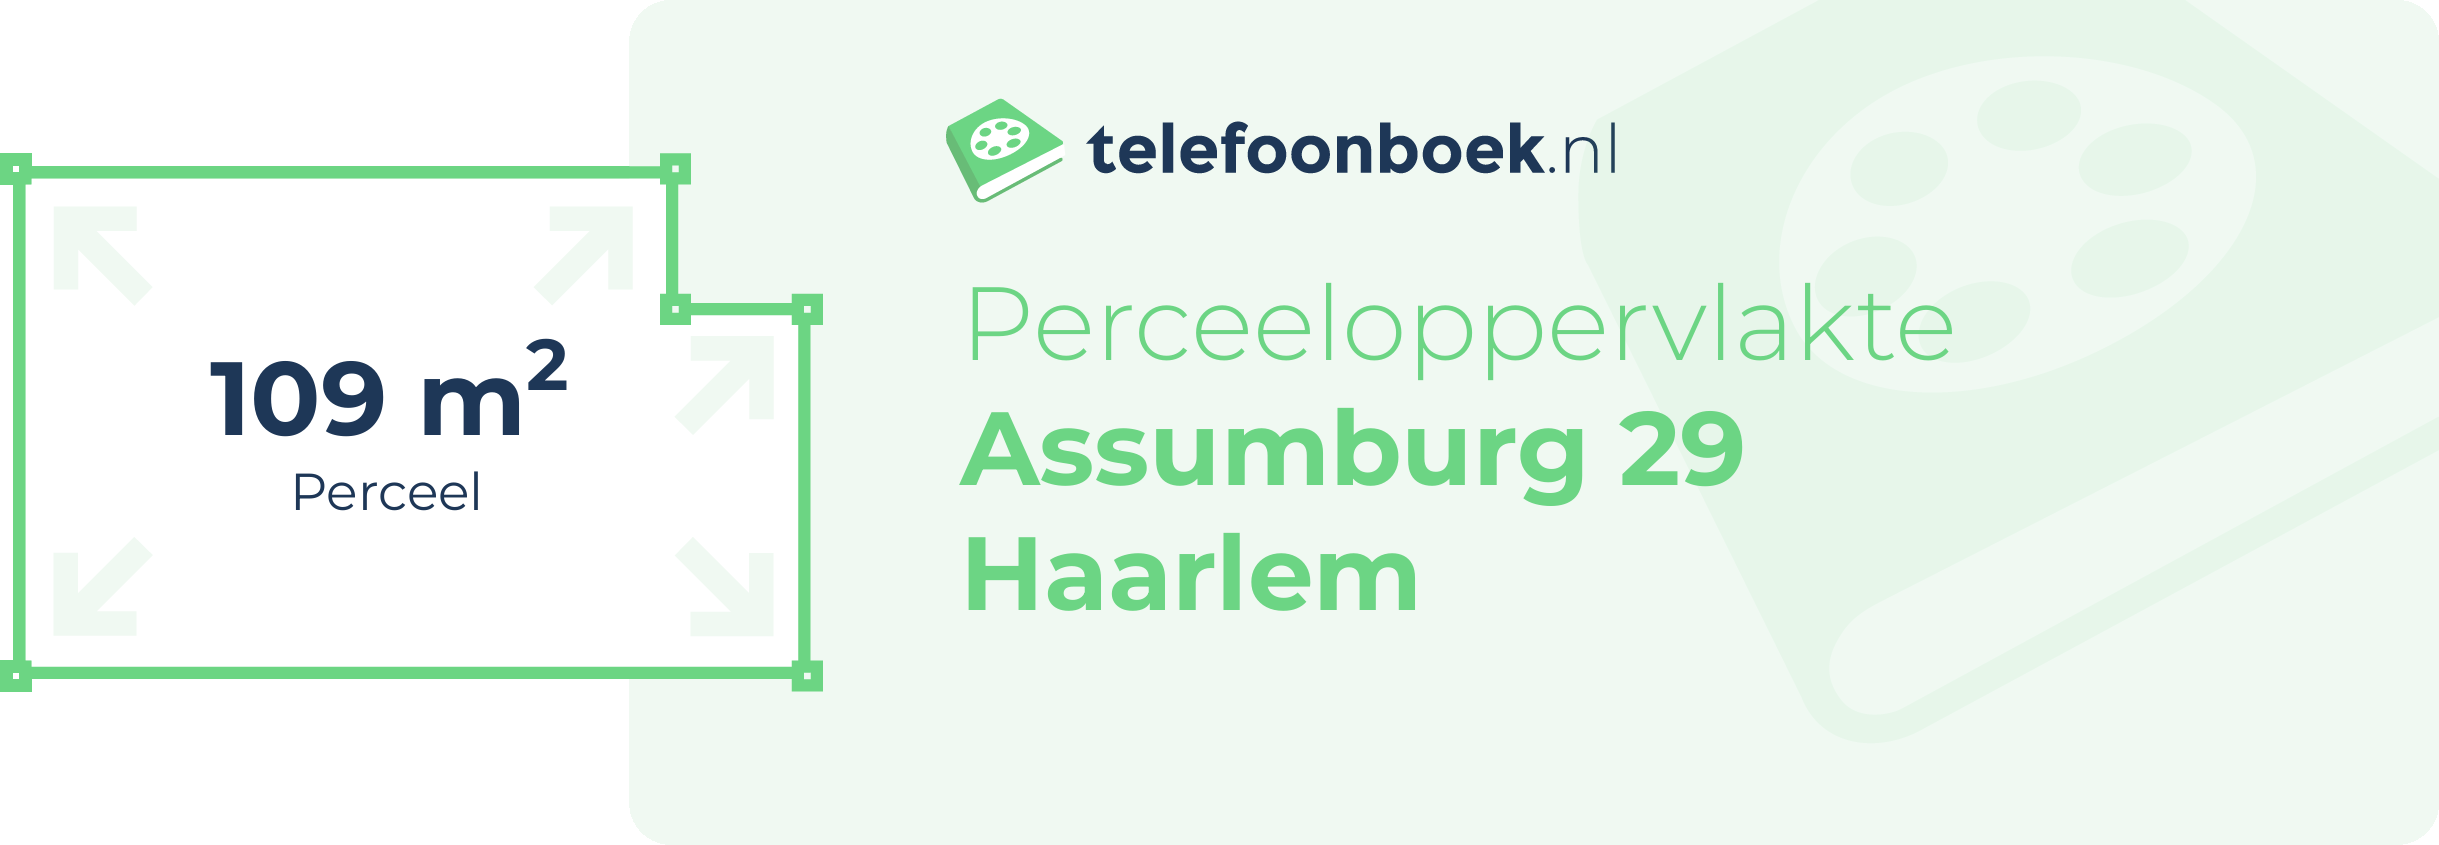 Perceeloppervlakte Assumburg 29 Haarlem